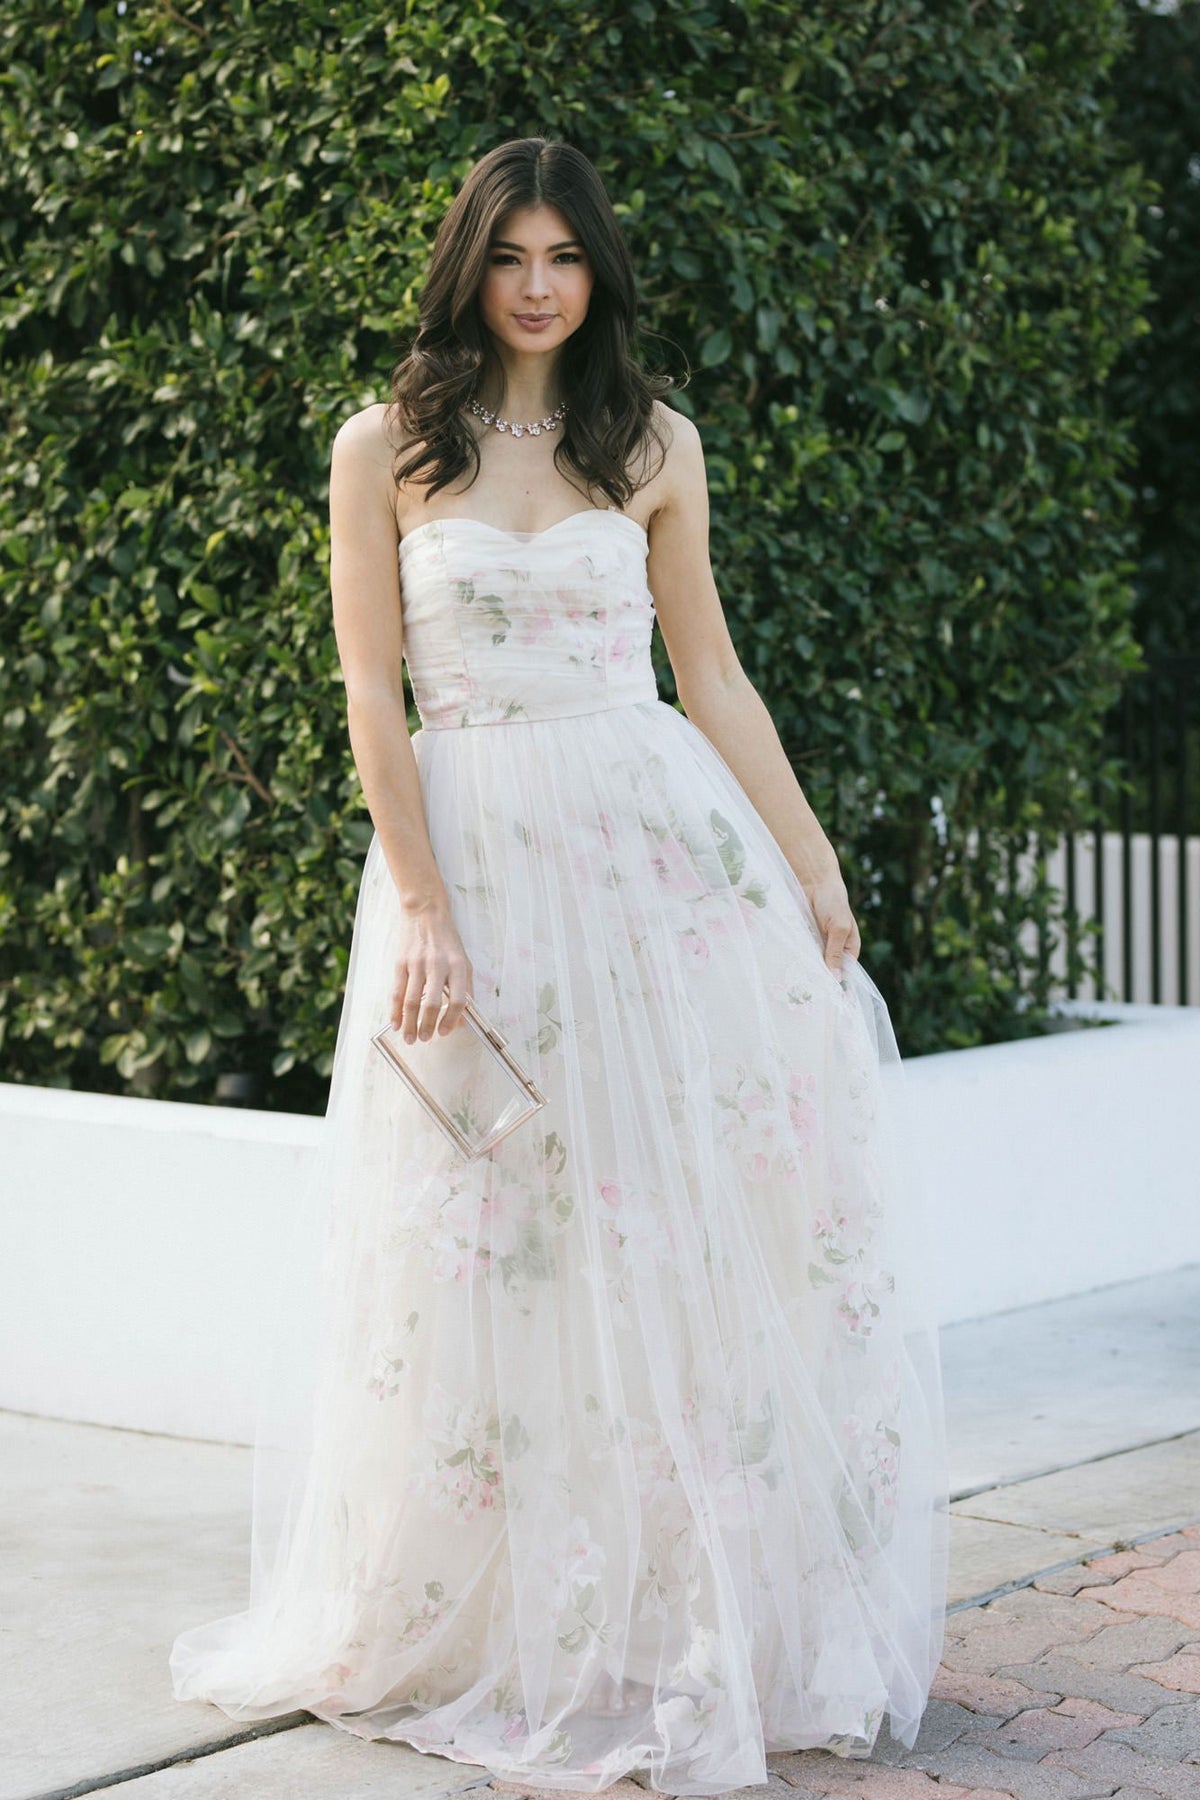 [Download 25+] Ellen Page Wedding Dresses